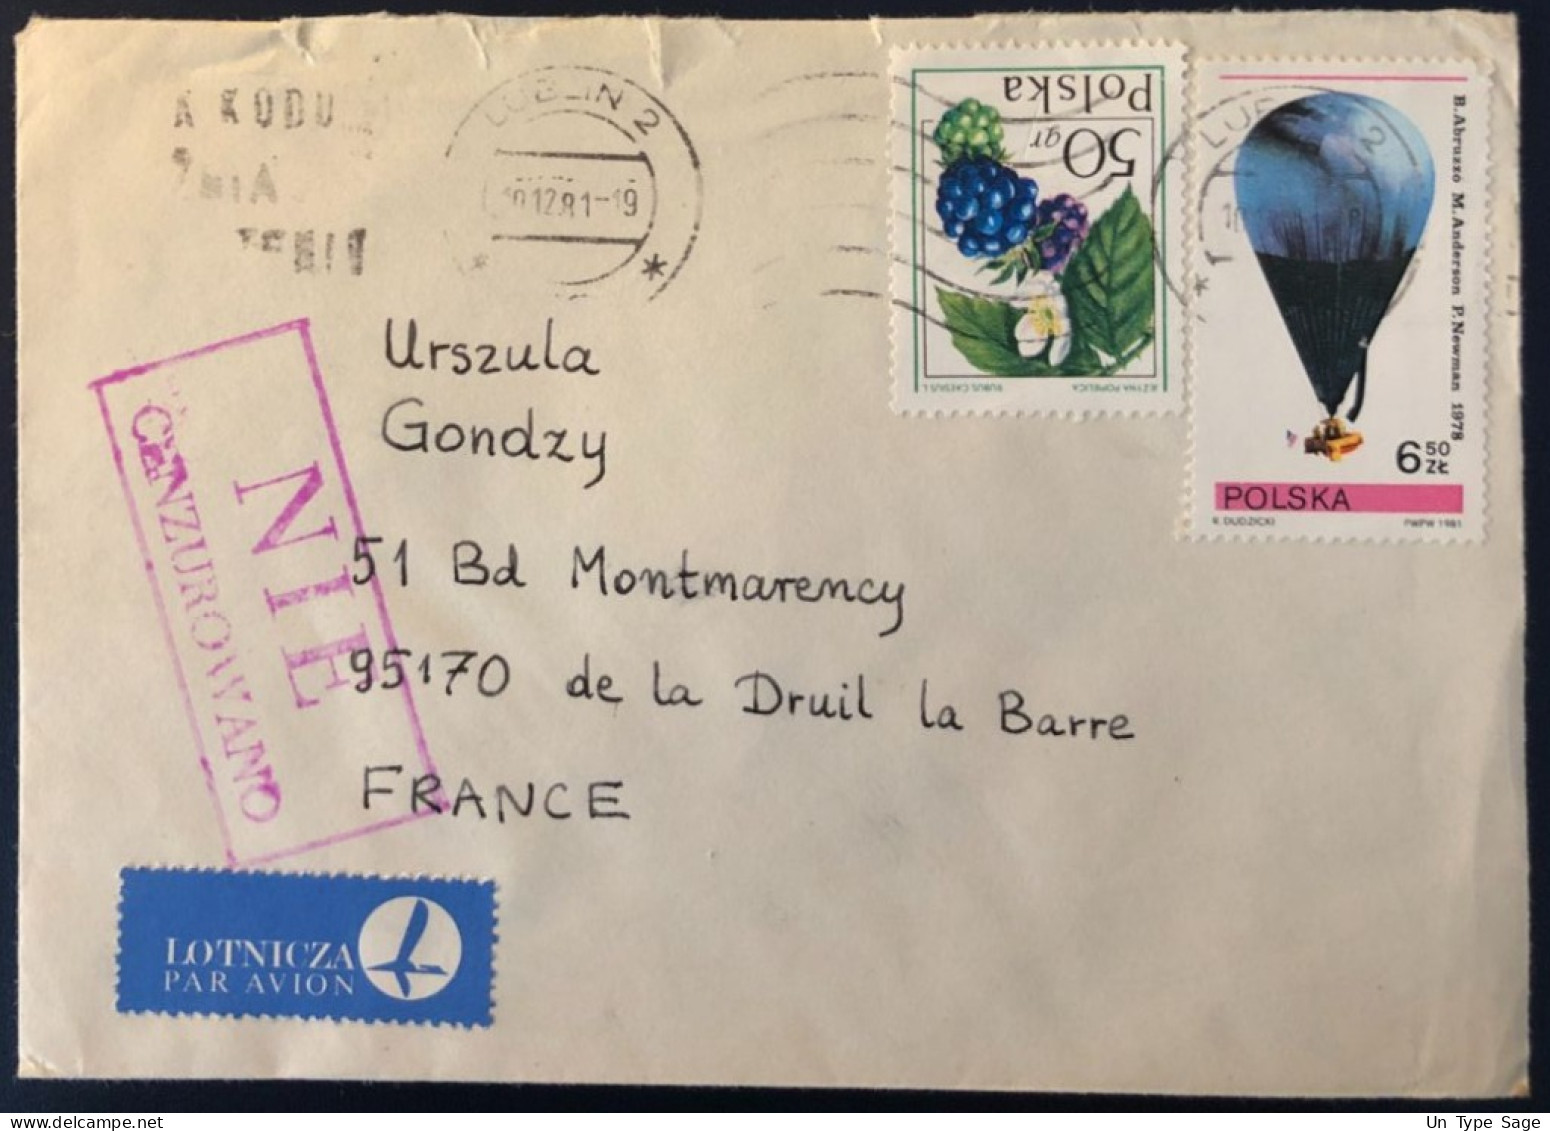 Pologne Divers Sur Enveloppe 10.12.1981 + Griffe NIE CENZUROWANO - (B1940) - Storia Postale